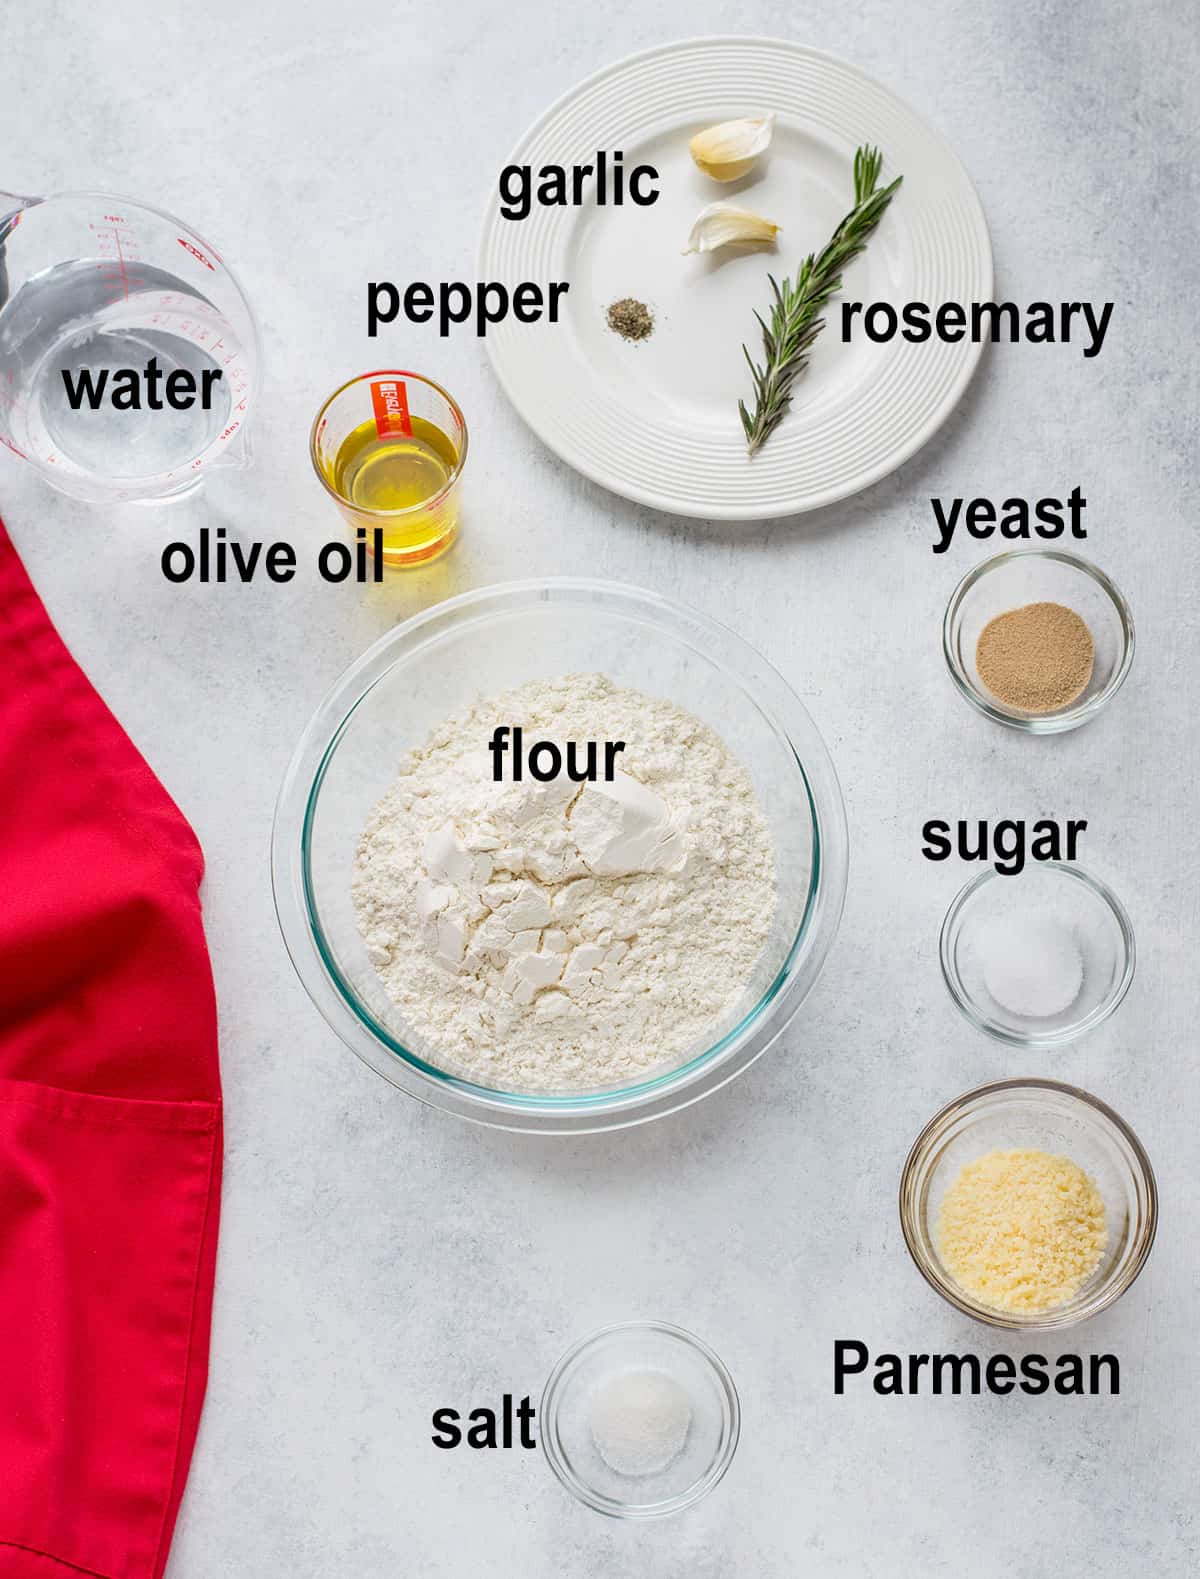 flour, garlic, rosemary, Parmesan, seasonings, yeast, sugar, oil